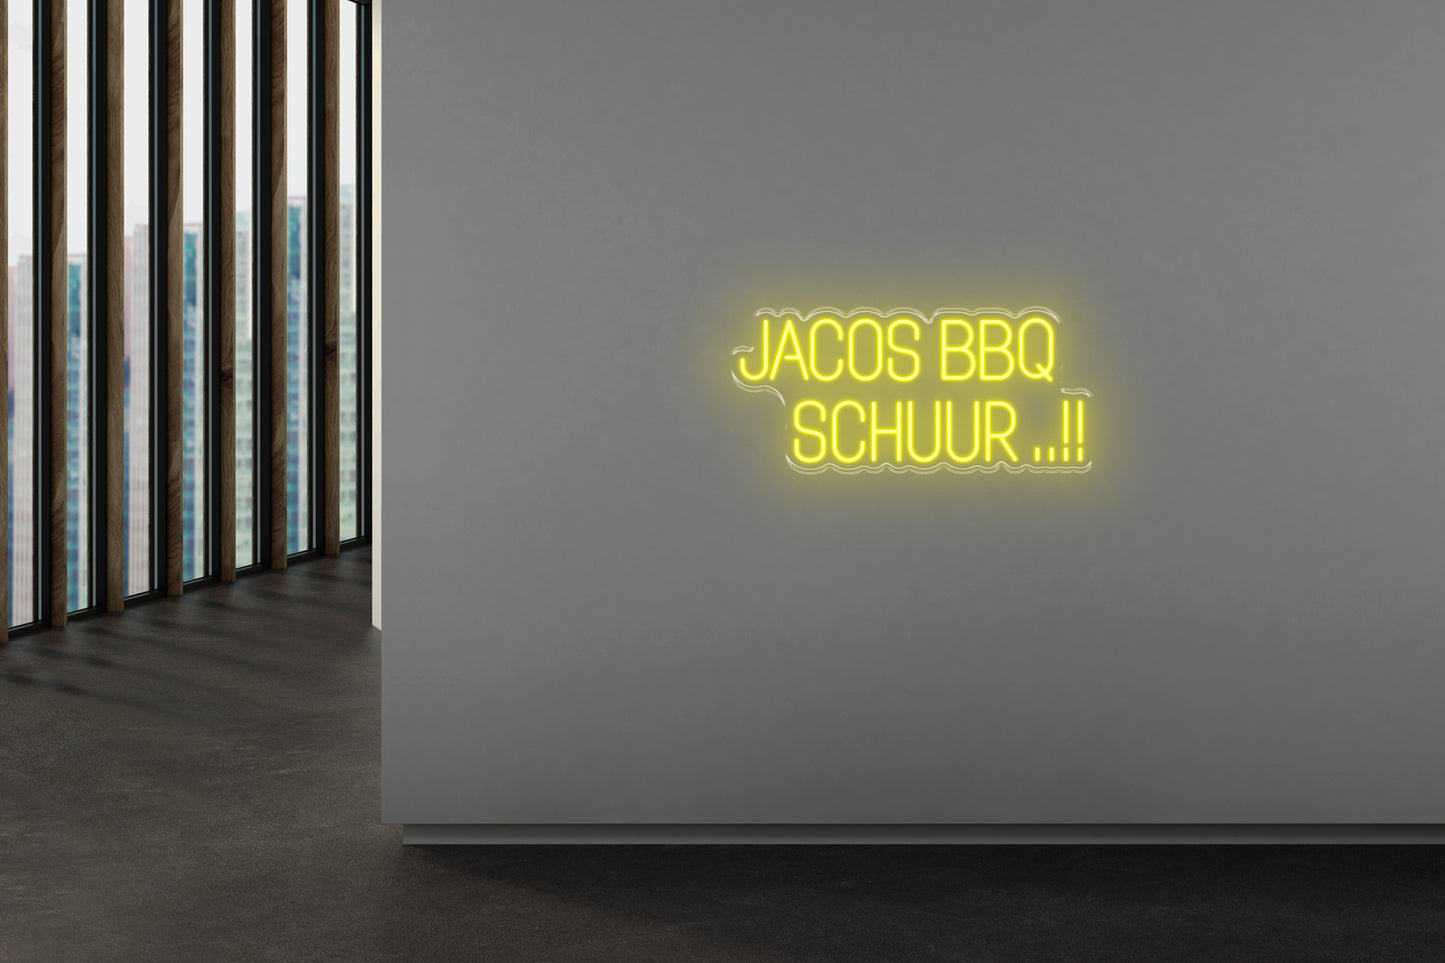 PowerLED Neon Sign (Indoor) -  Jacos BBQ V2